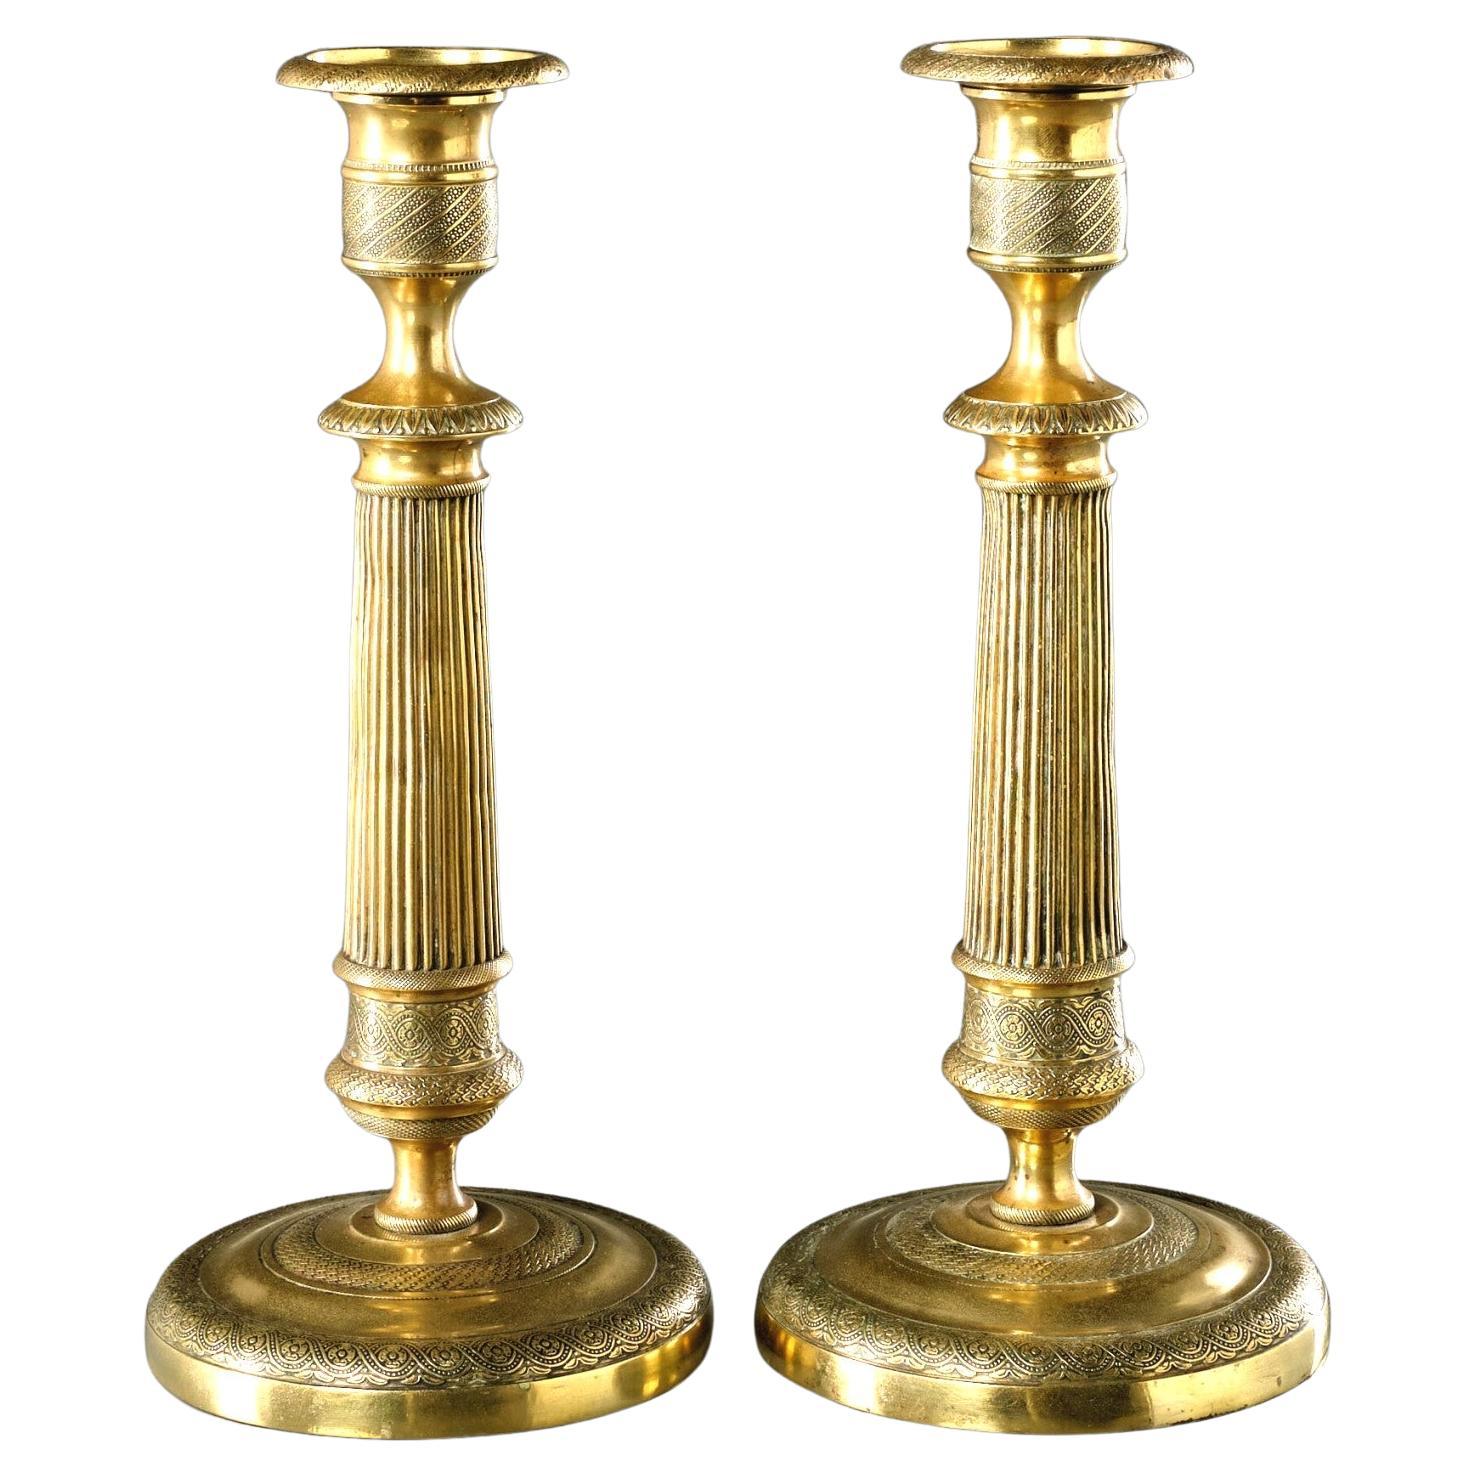 Very Handsome Pair of French Empire Period Gilt Brass Candlesticks, Circa 1820